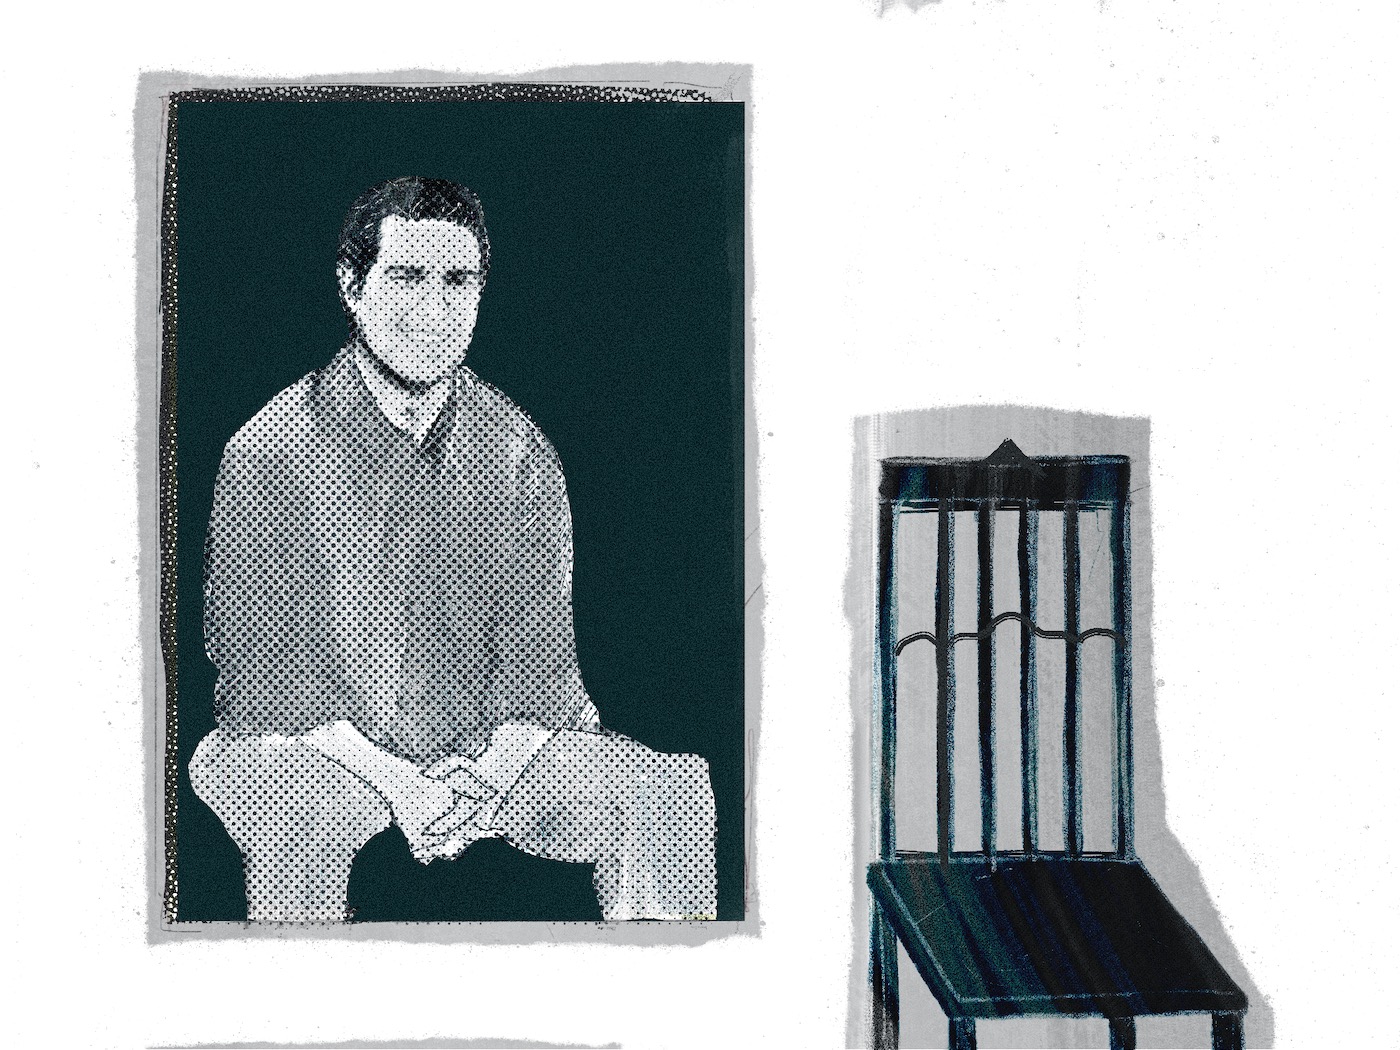 Drawing by Viktoriia Shcherbak of poster of Tom Cruise alongside an empty chair.